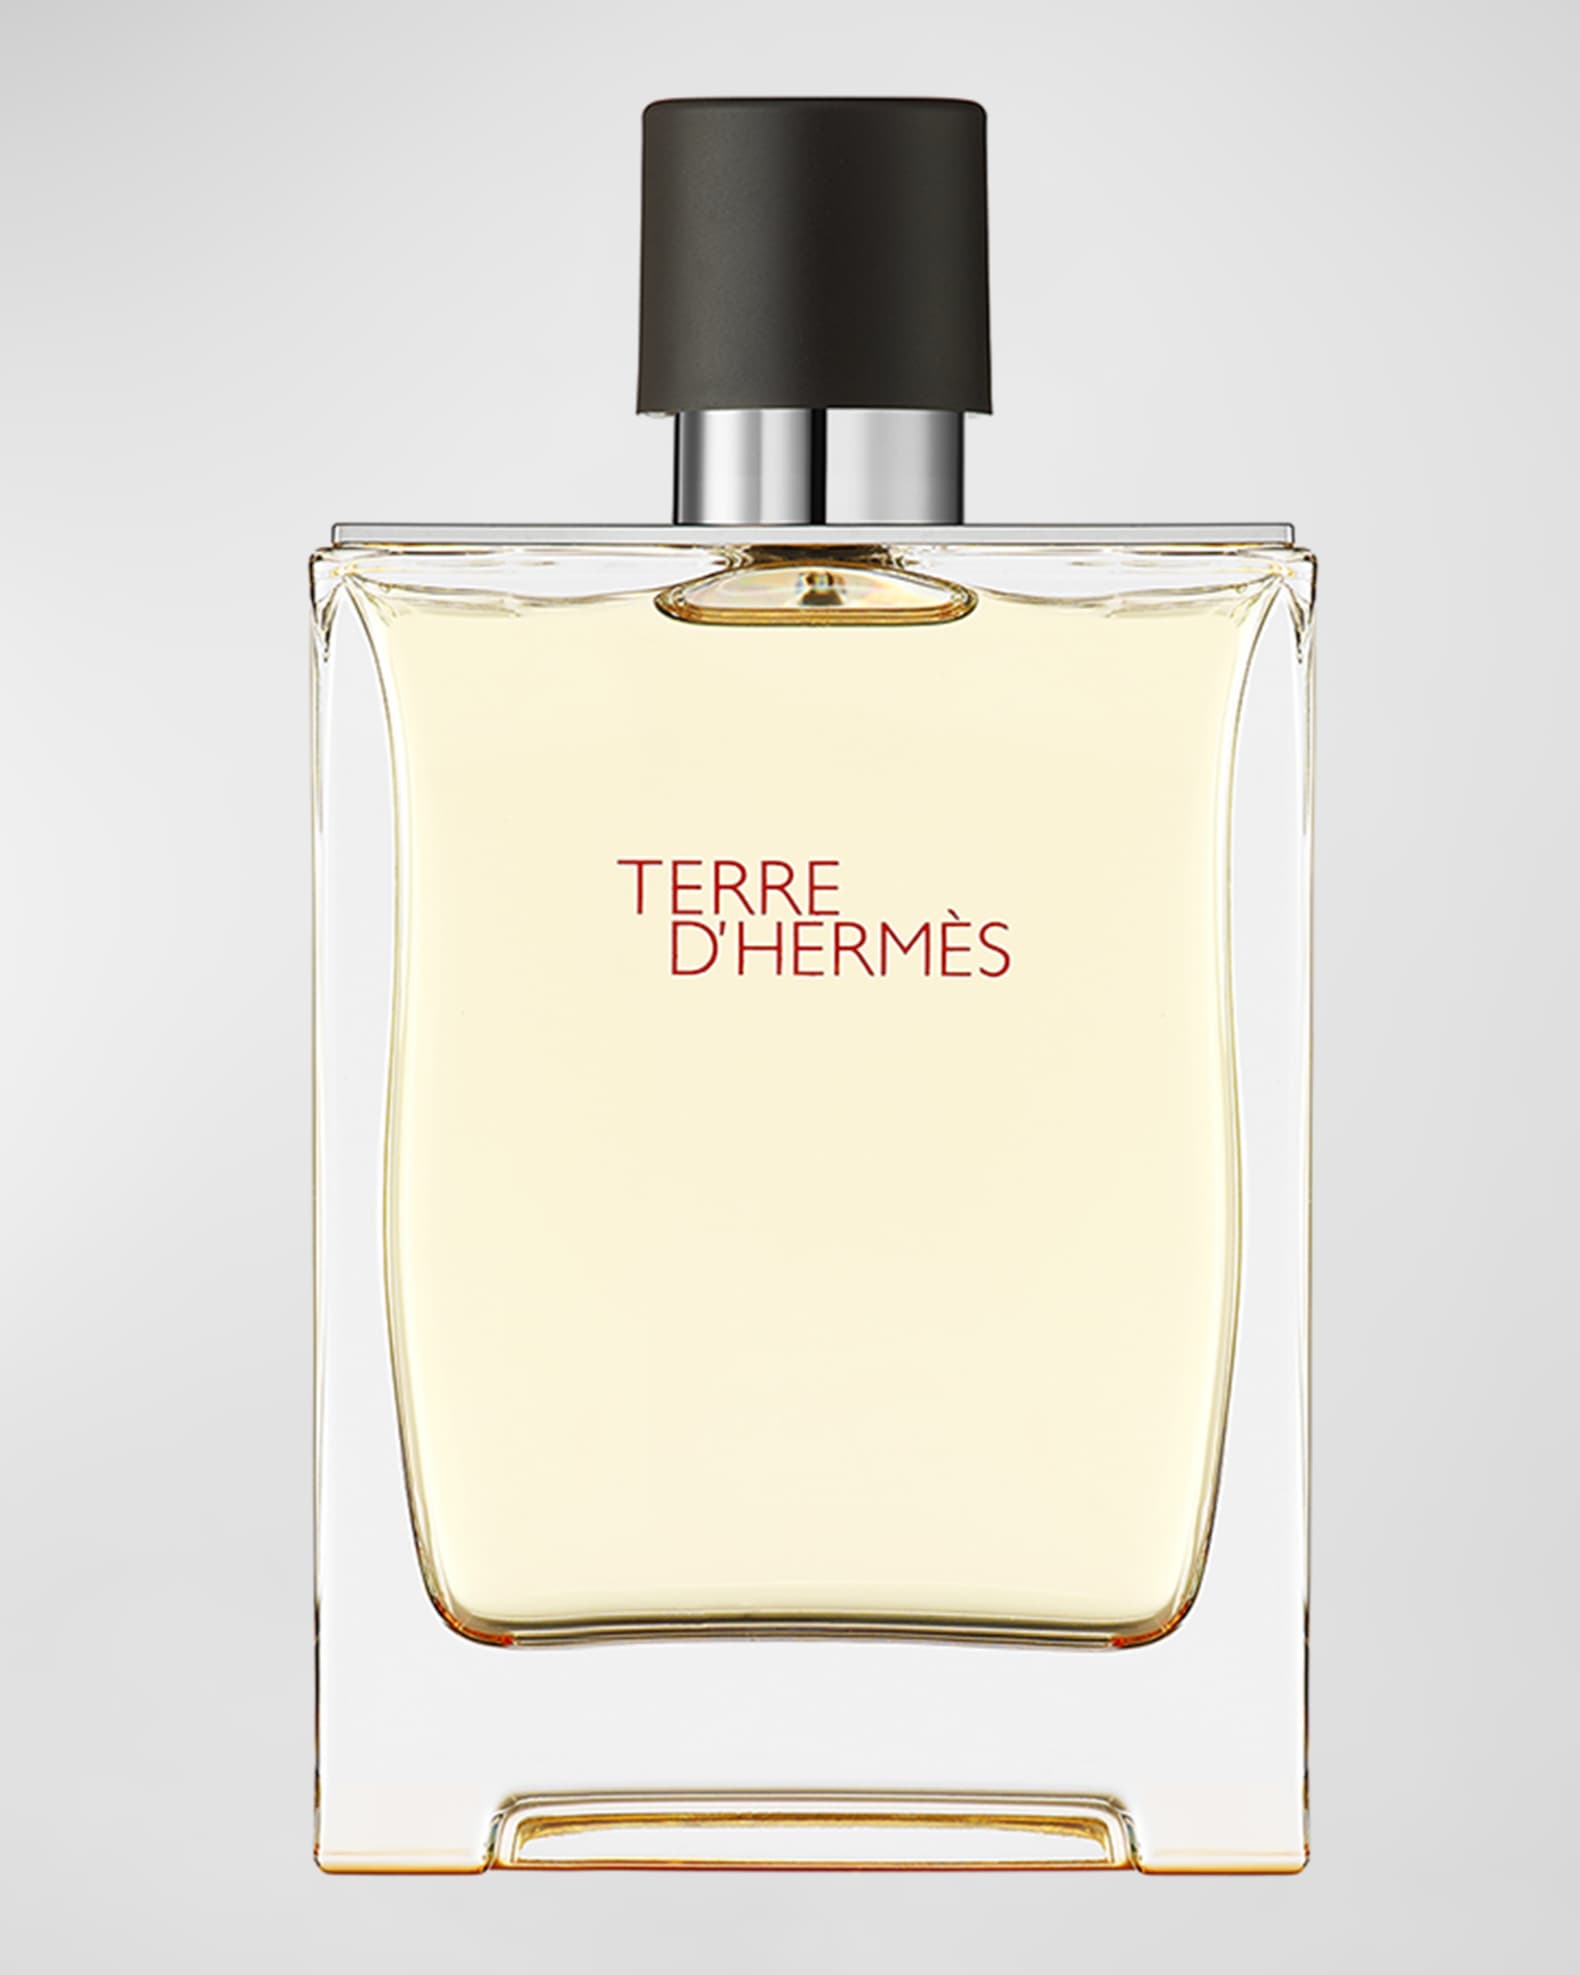 Neiman Marcus Hermes Cologne Clearance | website.jkuat.ac.ke